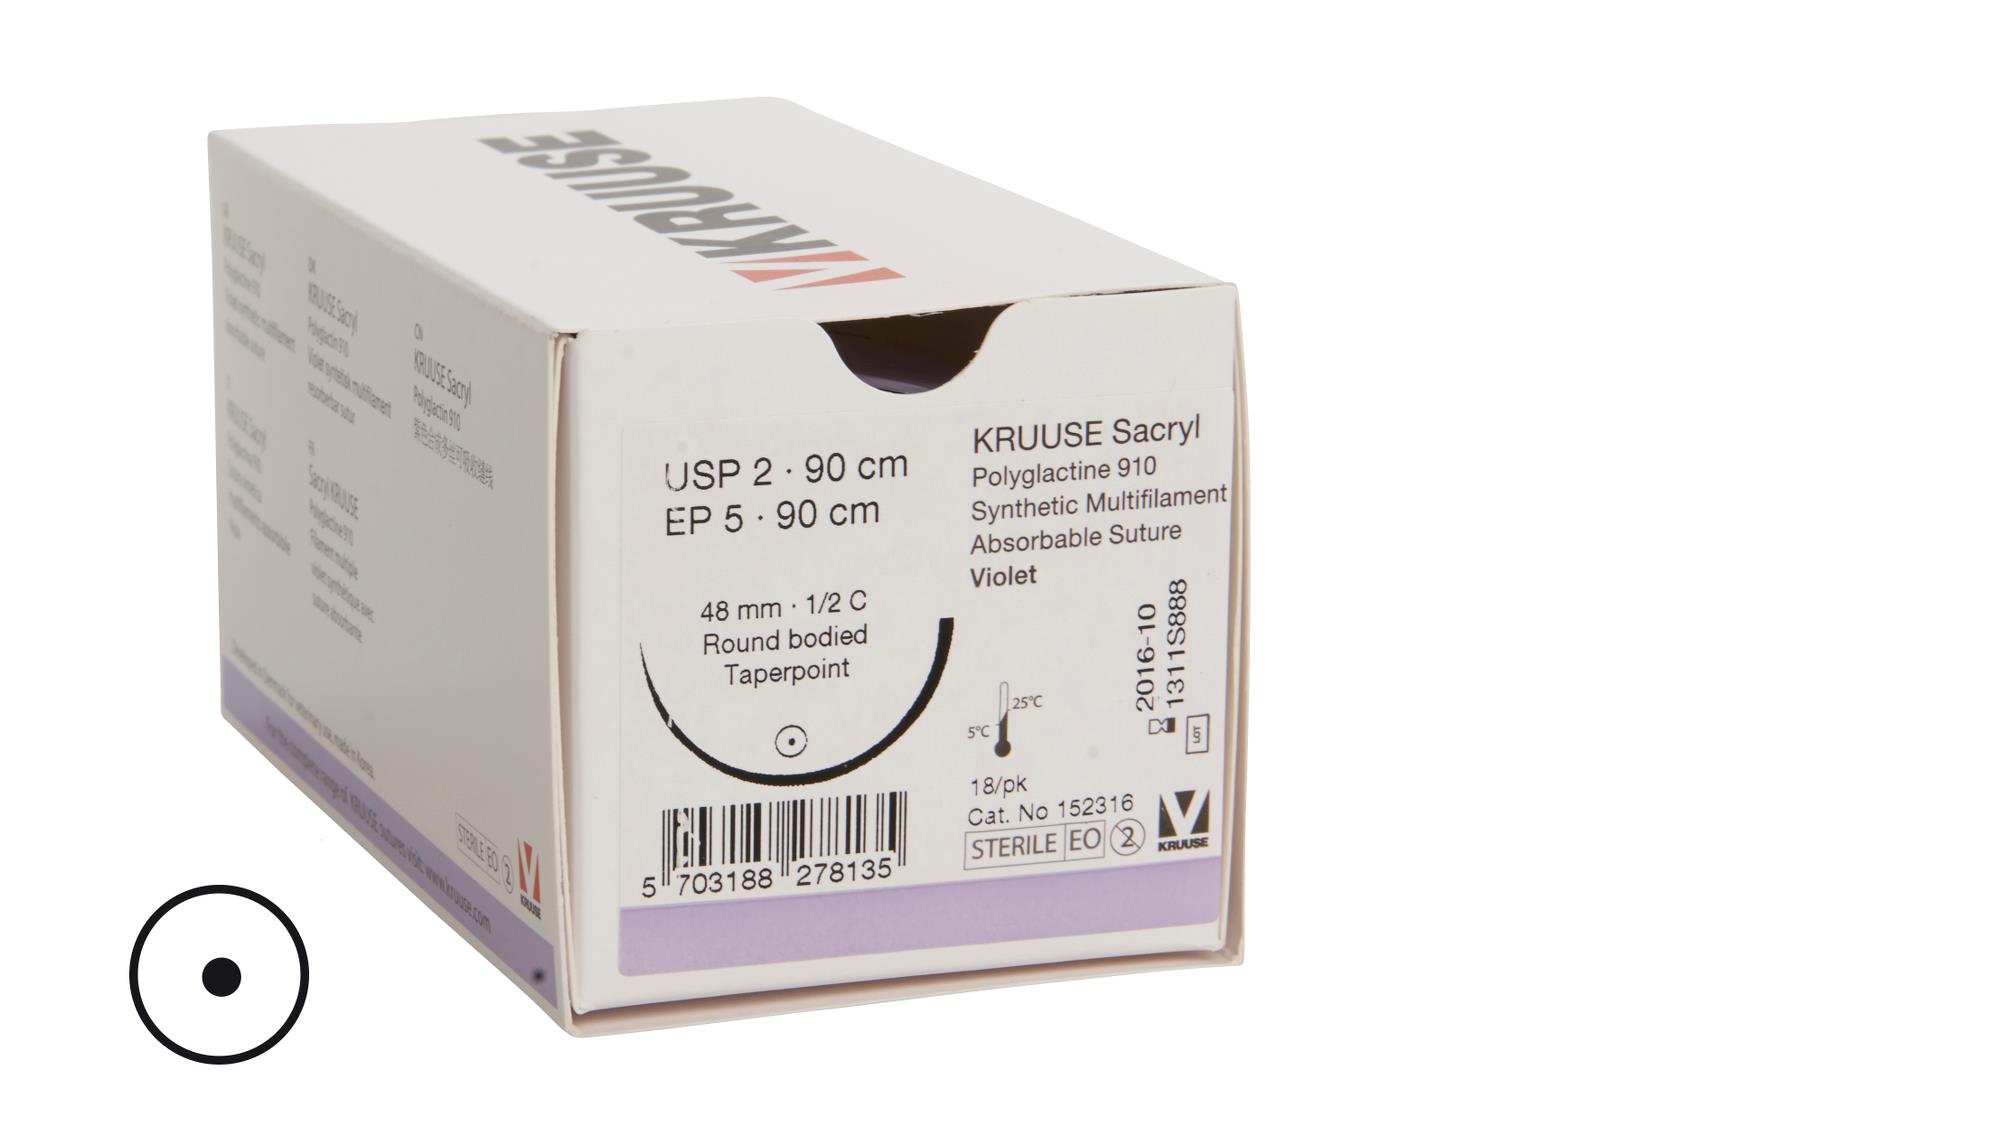 KRUUSE Sacryl Suture, USP 2, 90 cm, 48 mm, ½C, RB, 18/pk